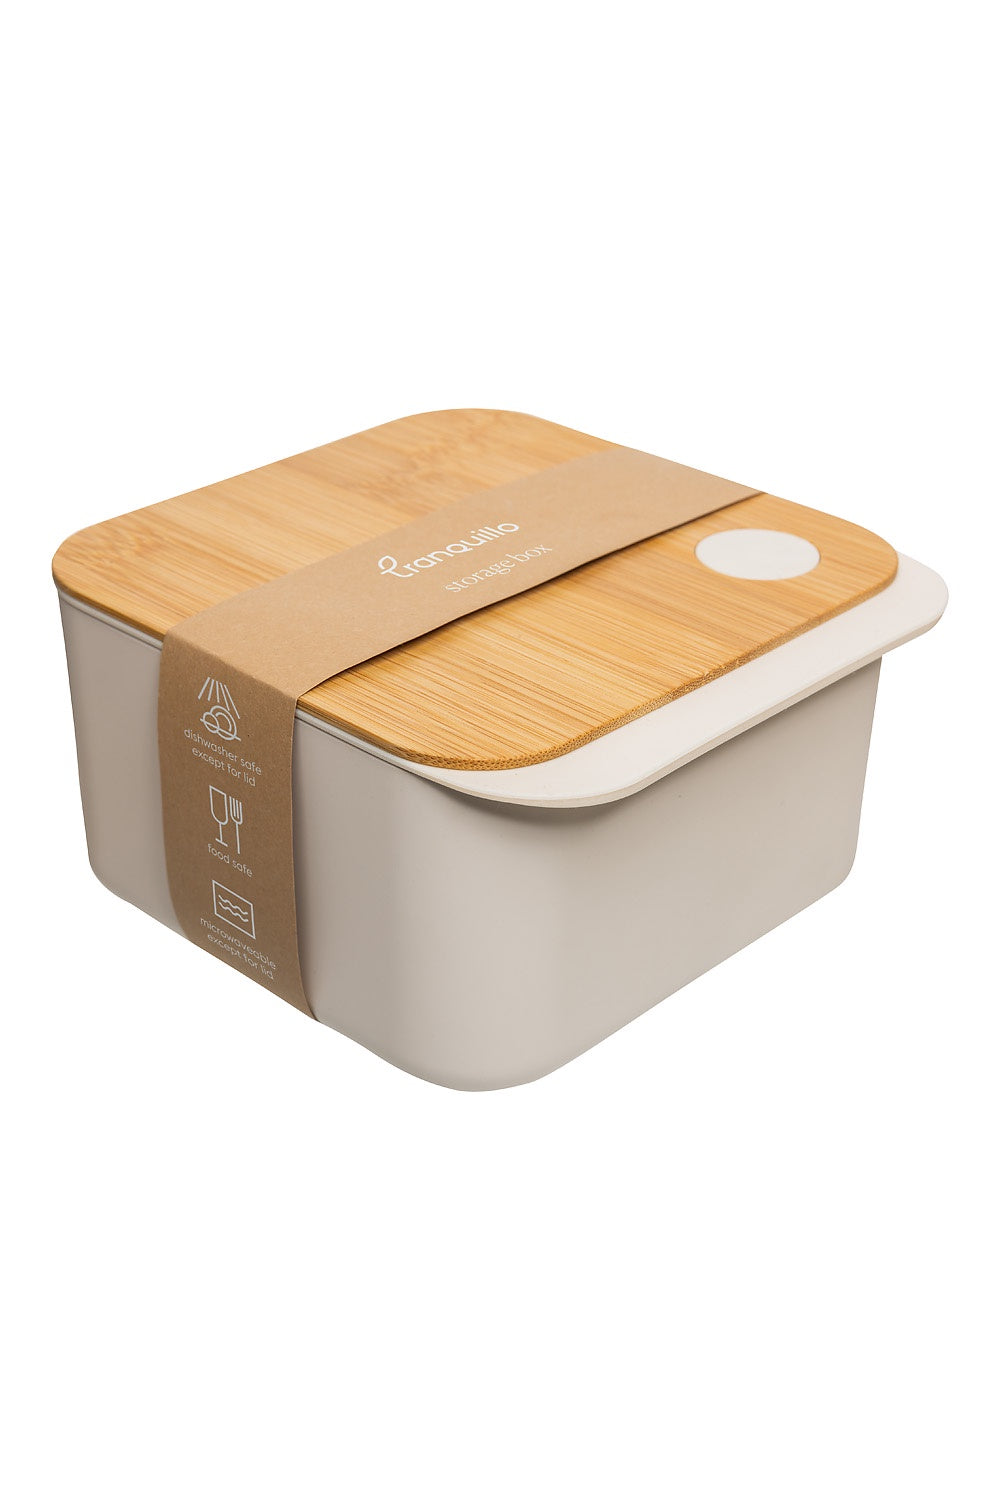 Tranquillo Storage Box PLAIN 1100 ml - Cream-Homeware-Ohh! By Gum - Shop Sustainable